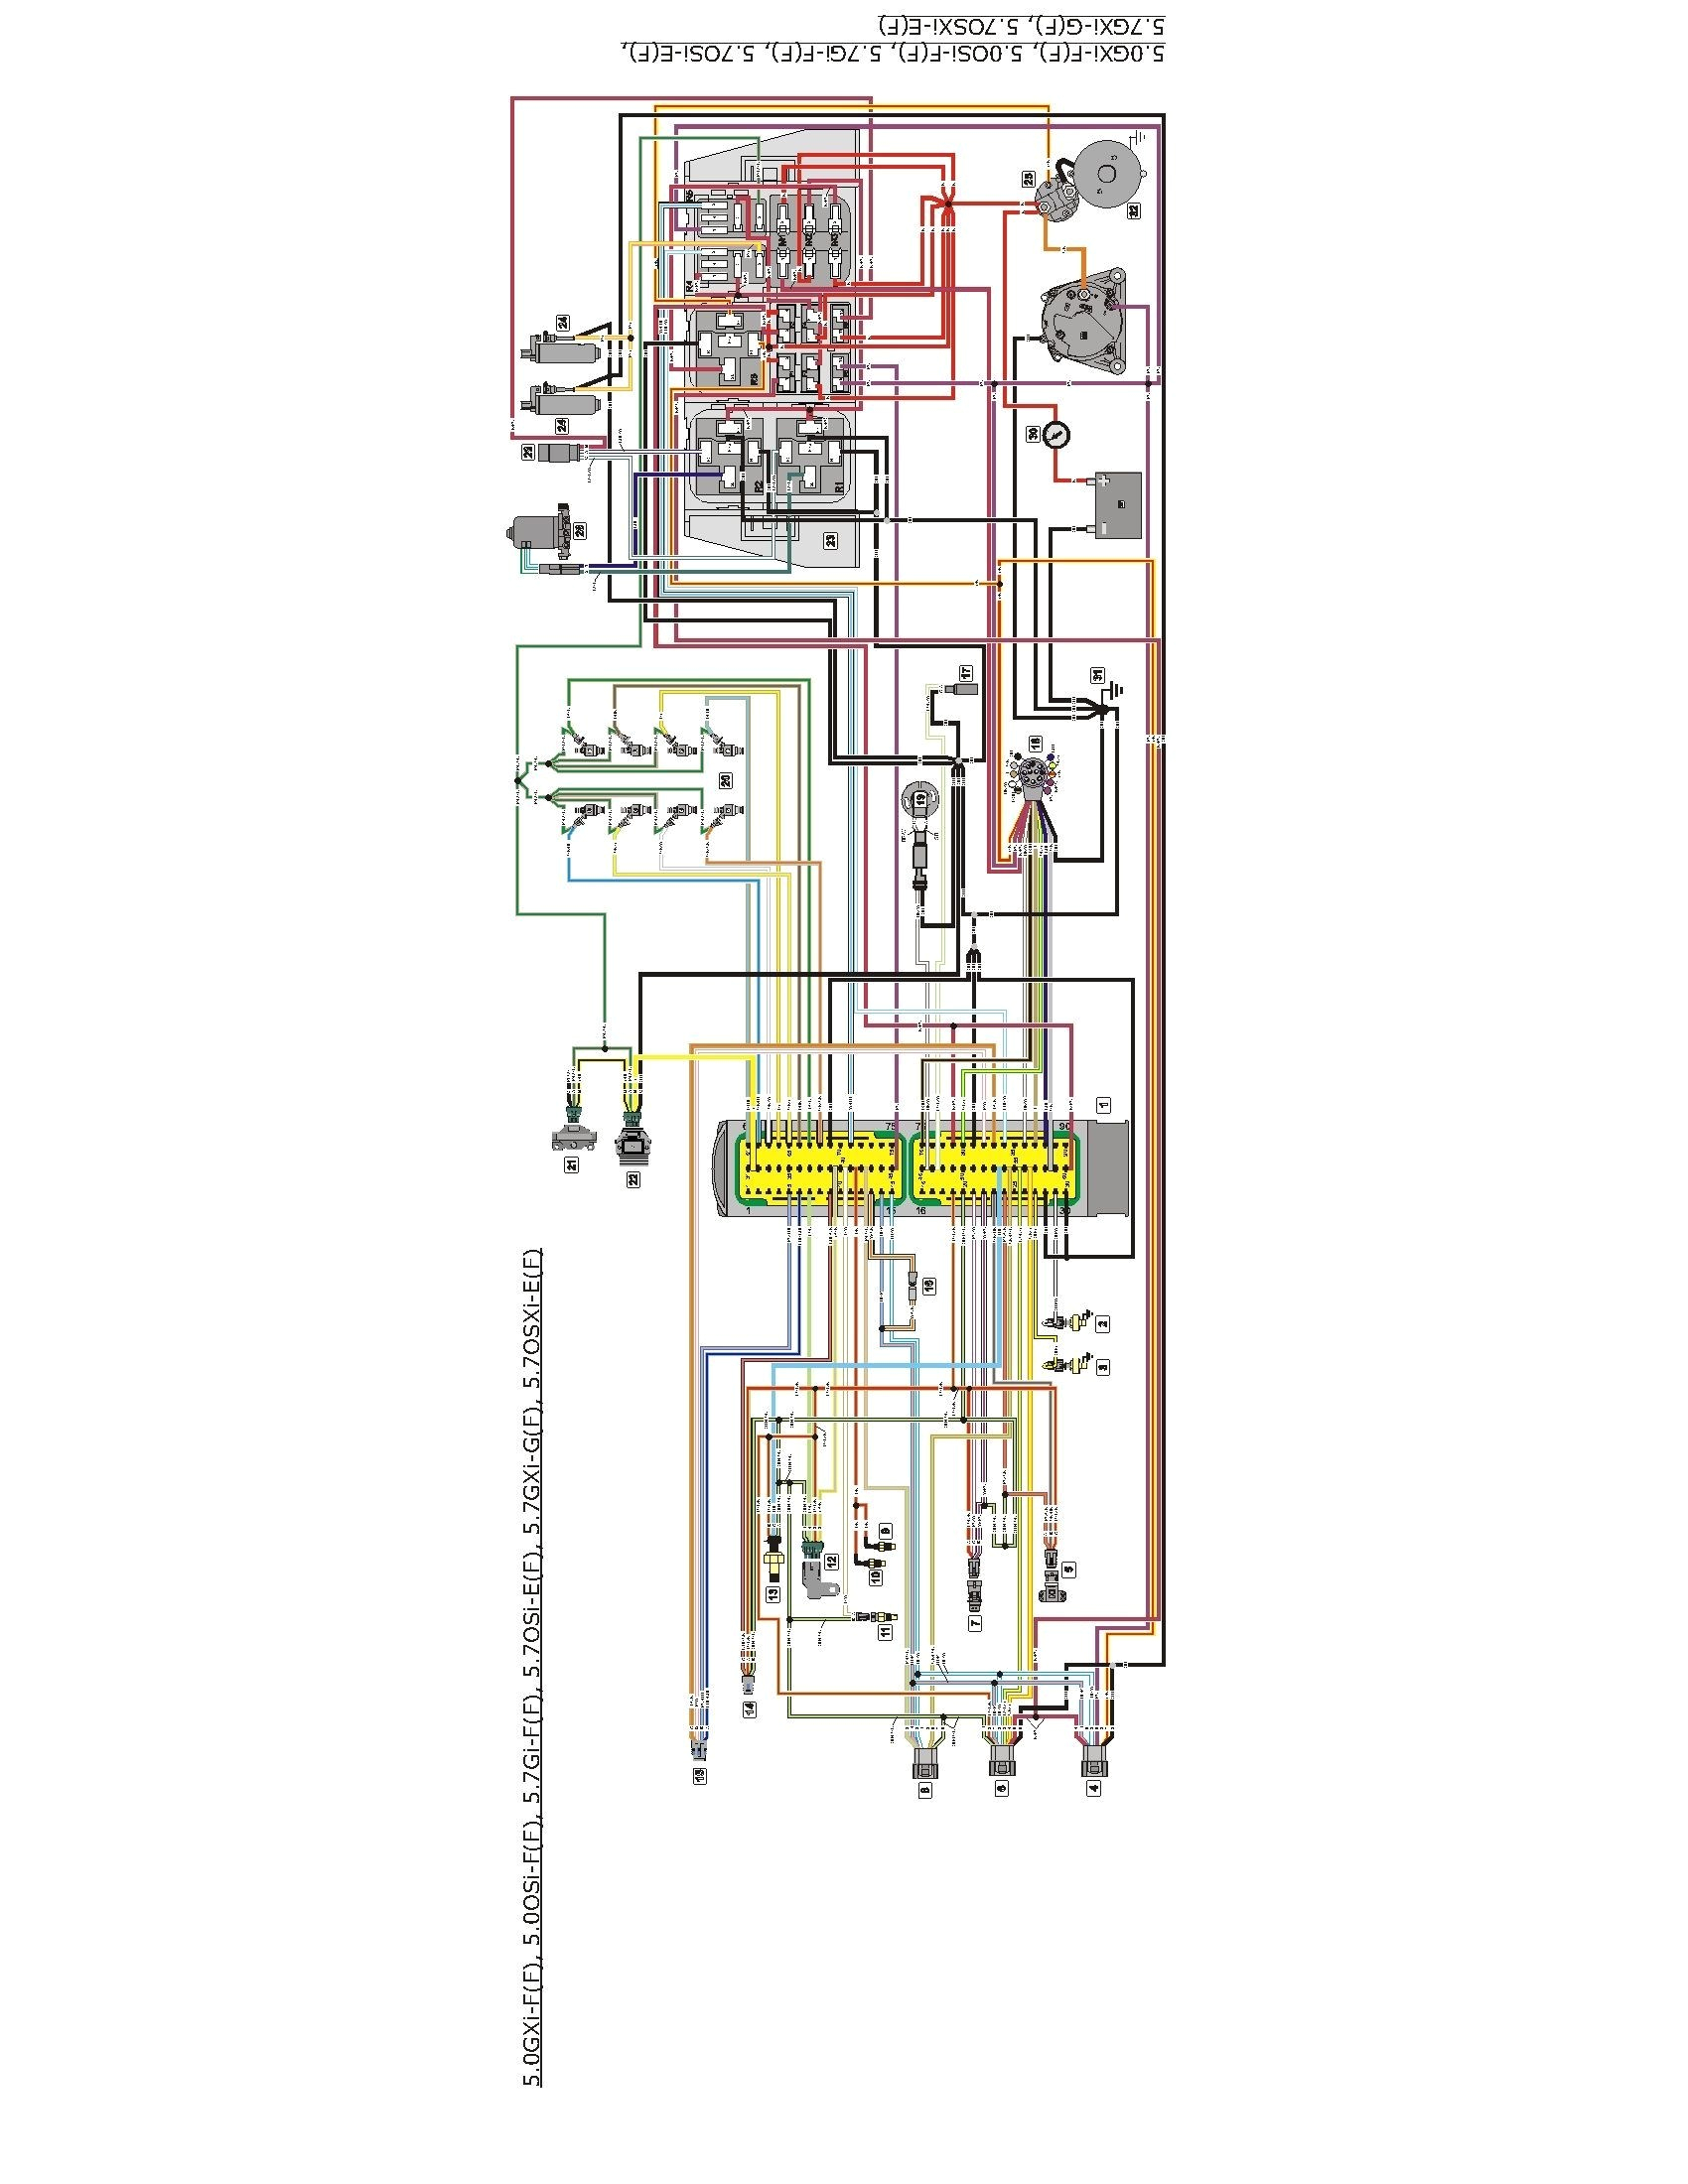 5 7 volvo penta wiring diagram wiring diagram review volvo penta 5 7 gi wiring diagram 5